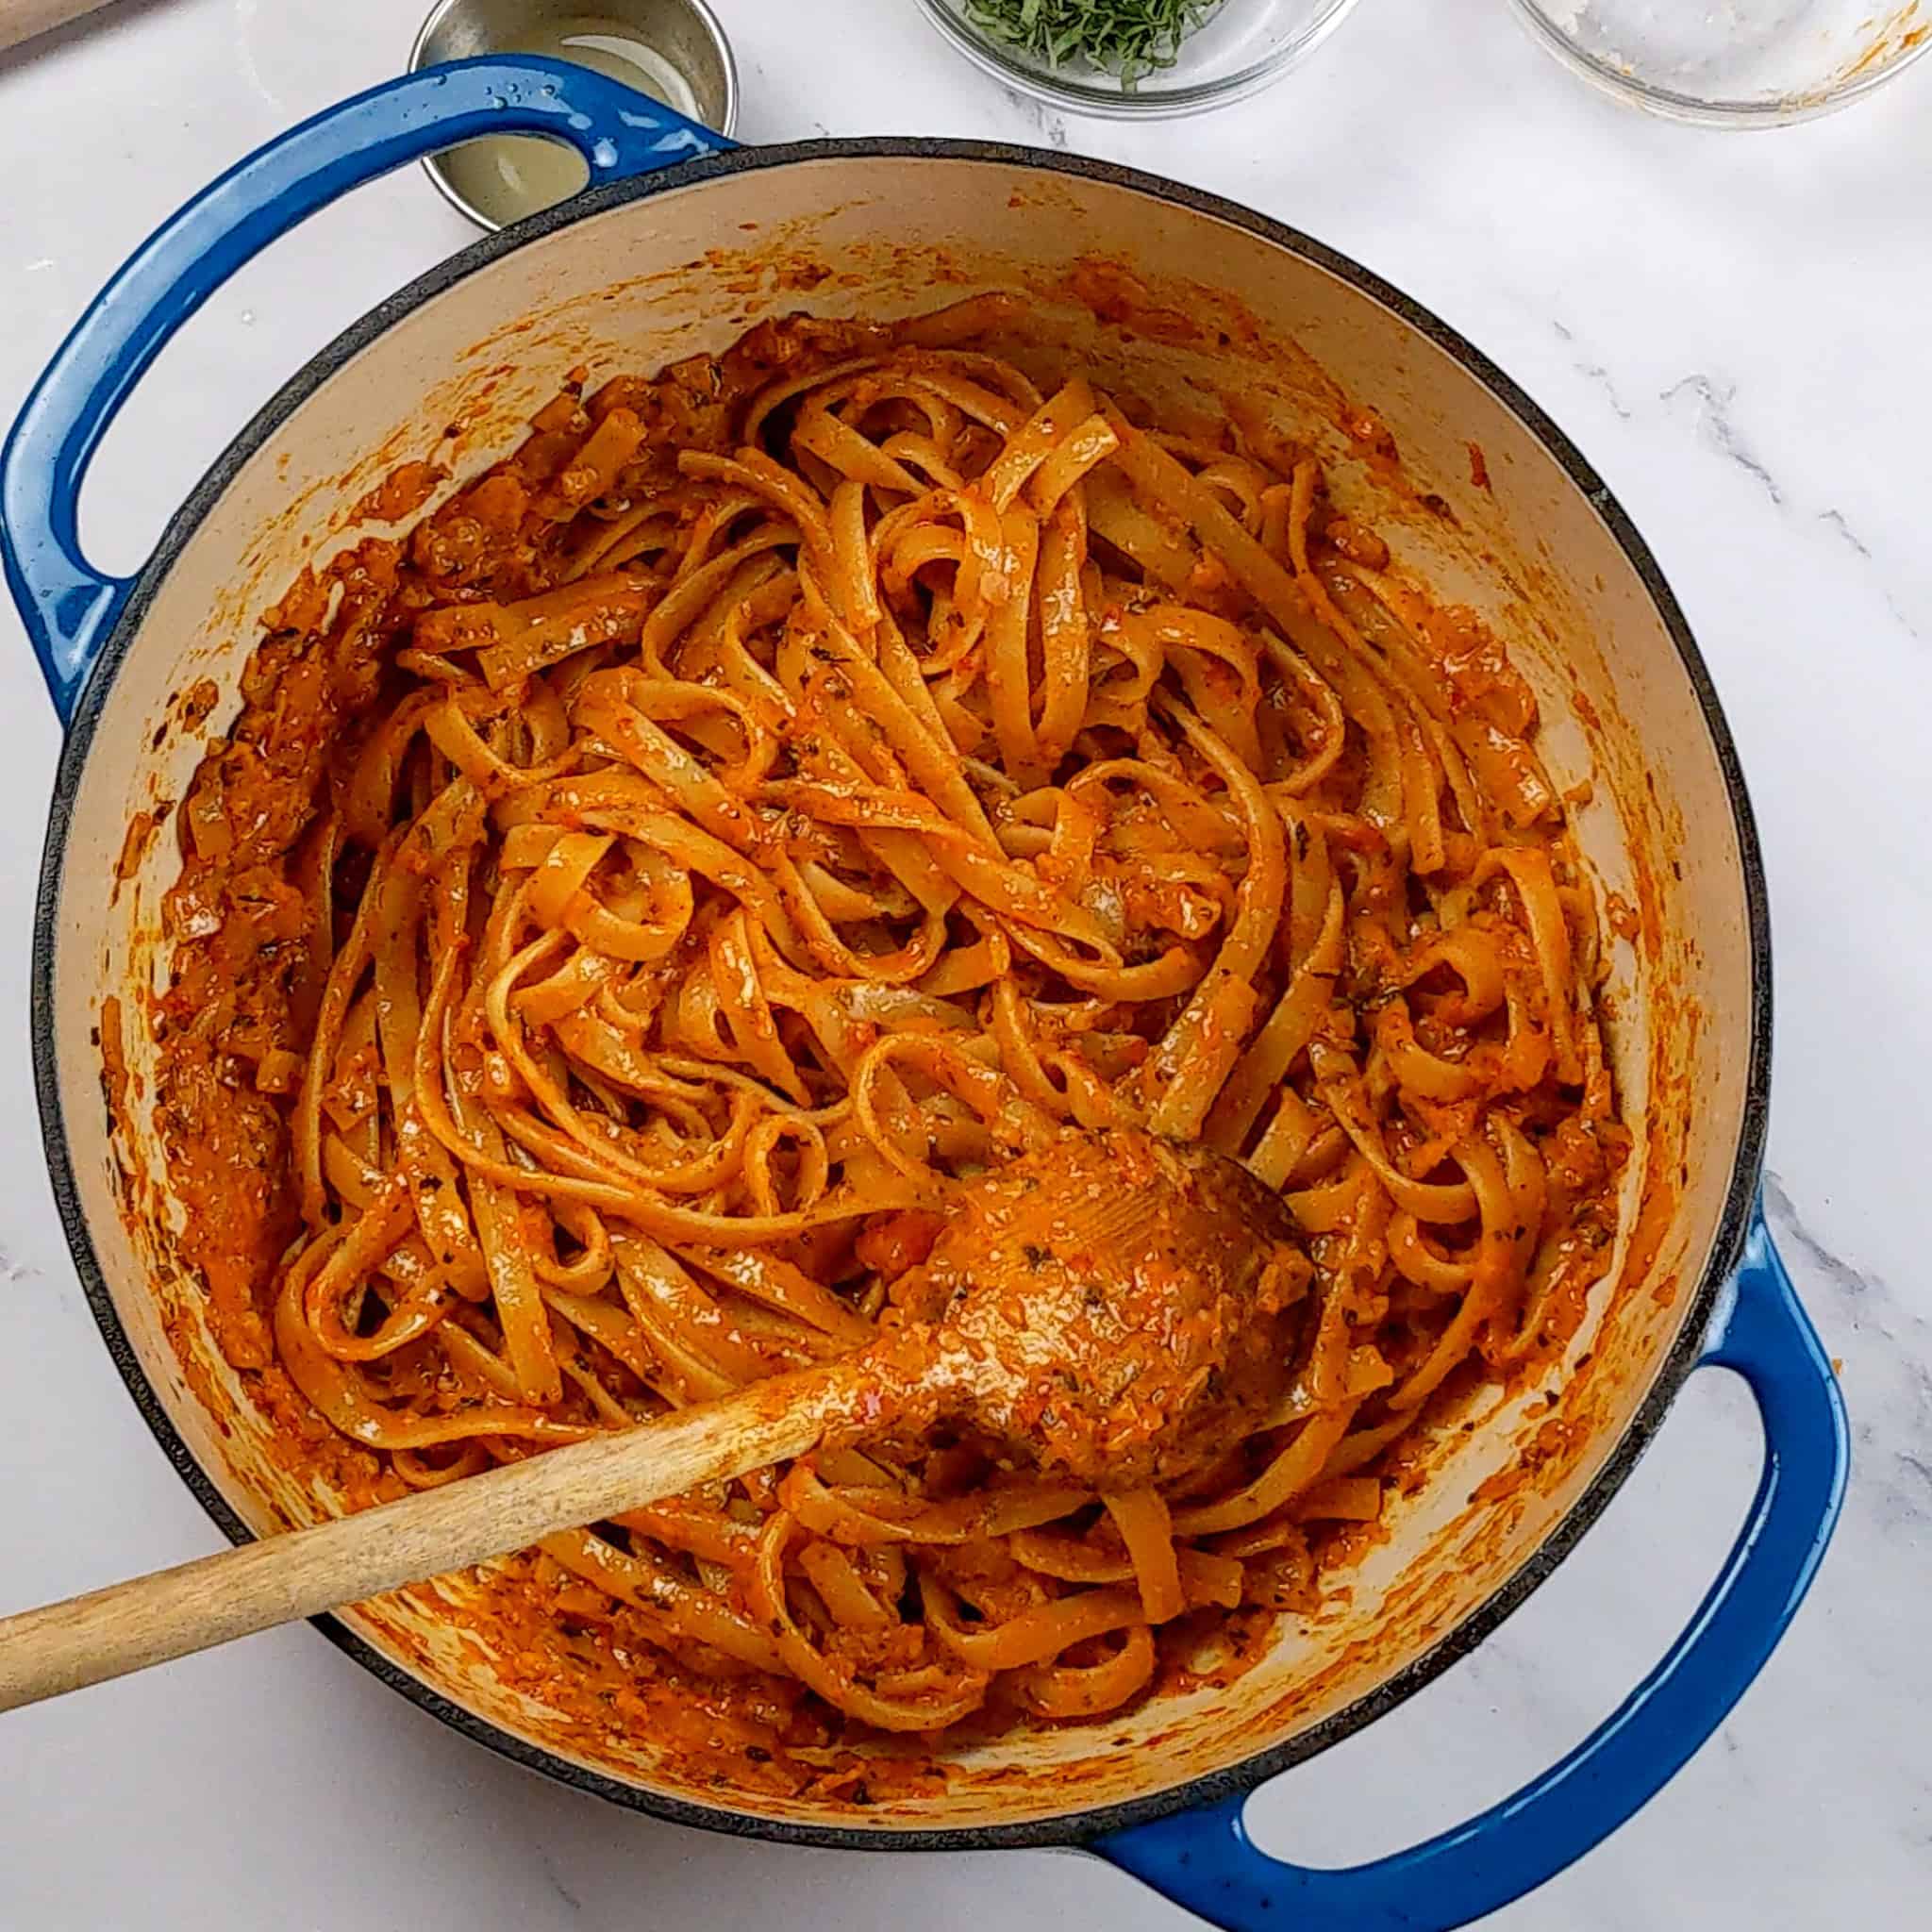 chili garlic sauce pasta sauce soaked fettuccini pasta in a dutch oven.